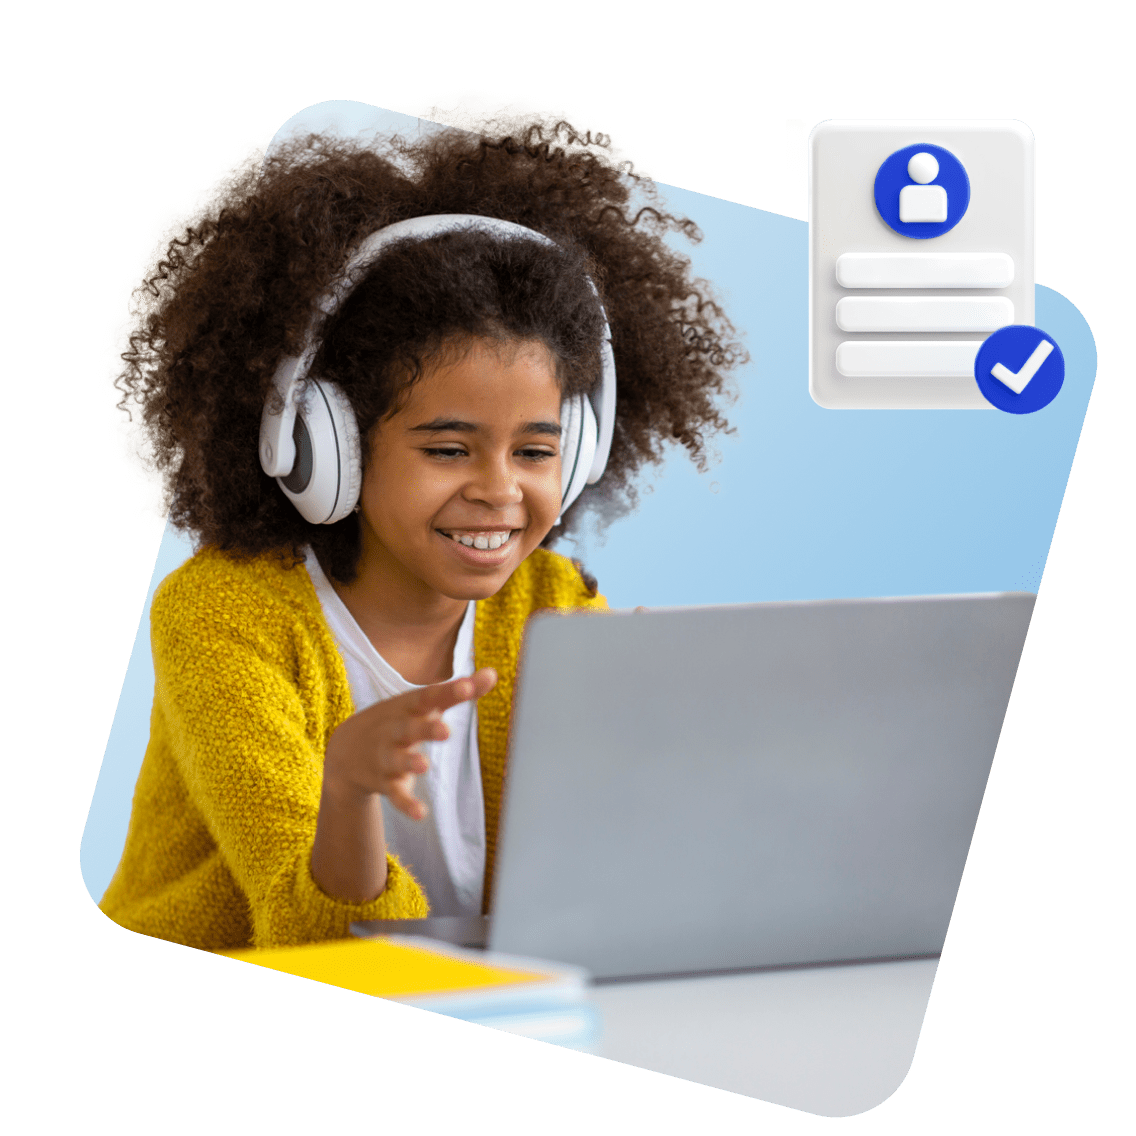 Tennessee Online Schools image 1 (name 3 Young Girl Laptop Headphones Certificate 1 1)